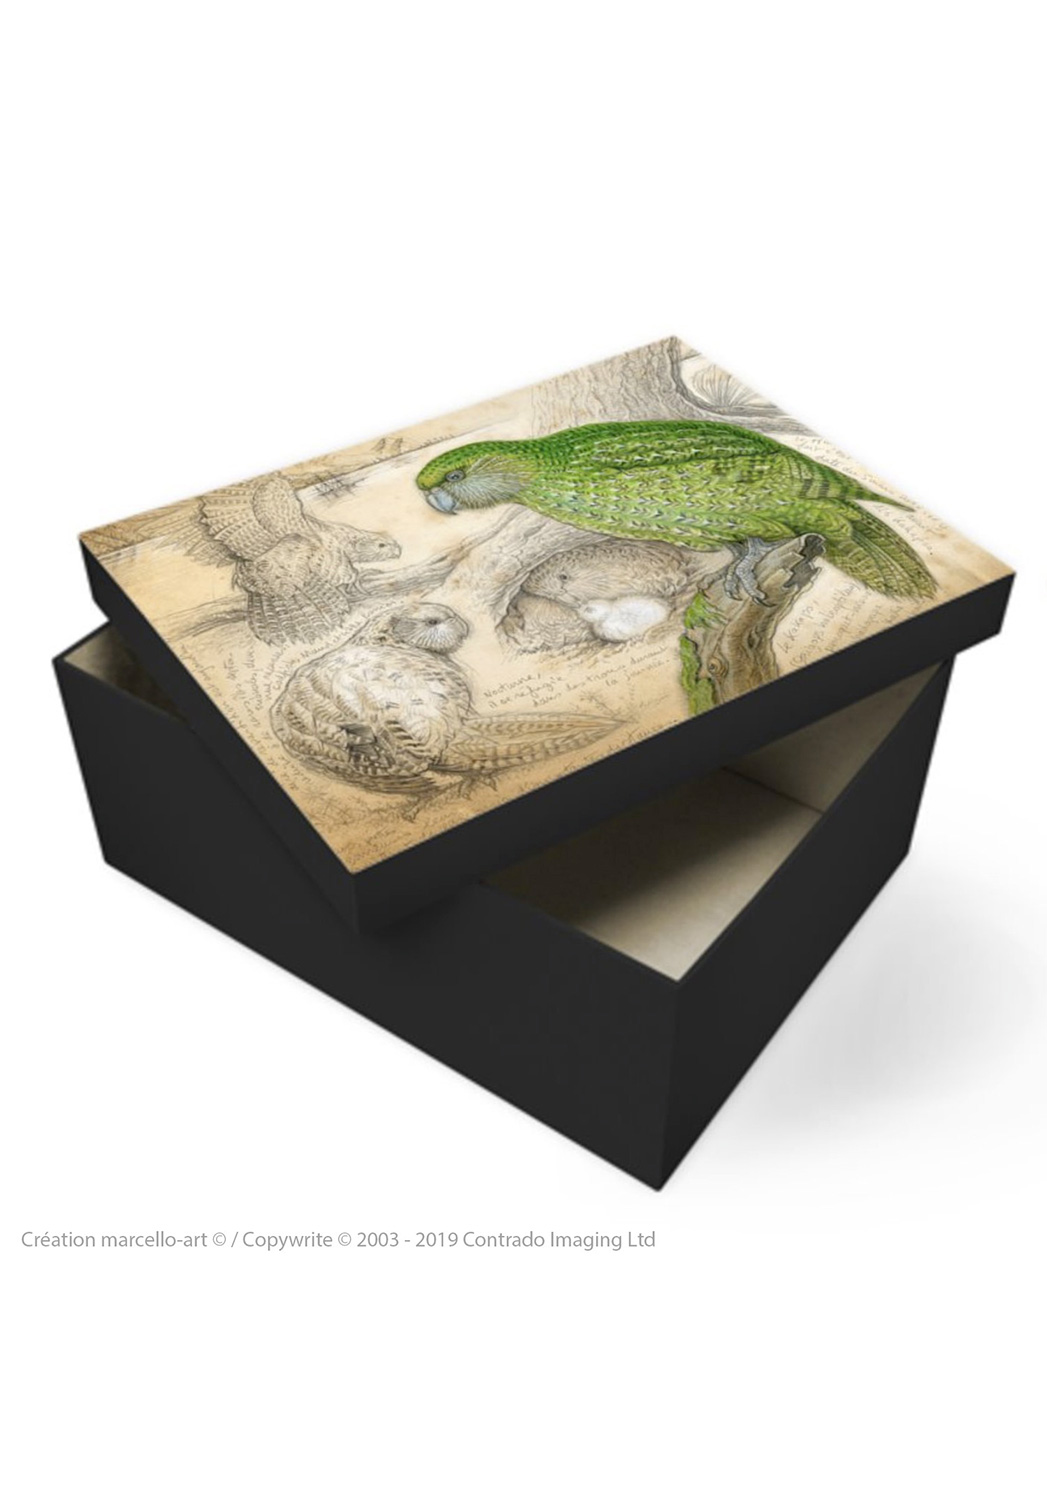 Marcello-art: Decoration accessoiries Souvenir box 192 kakapo